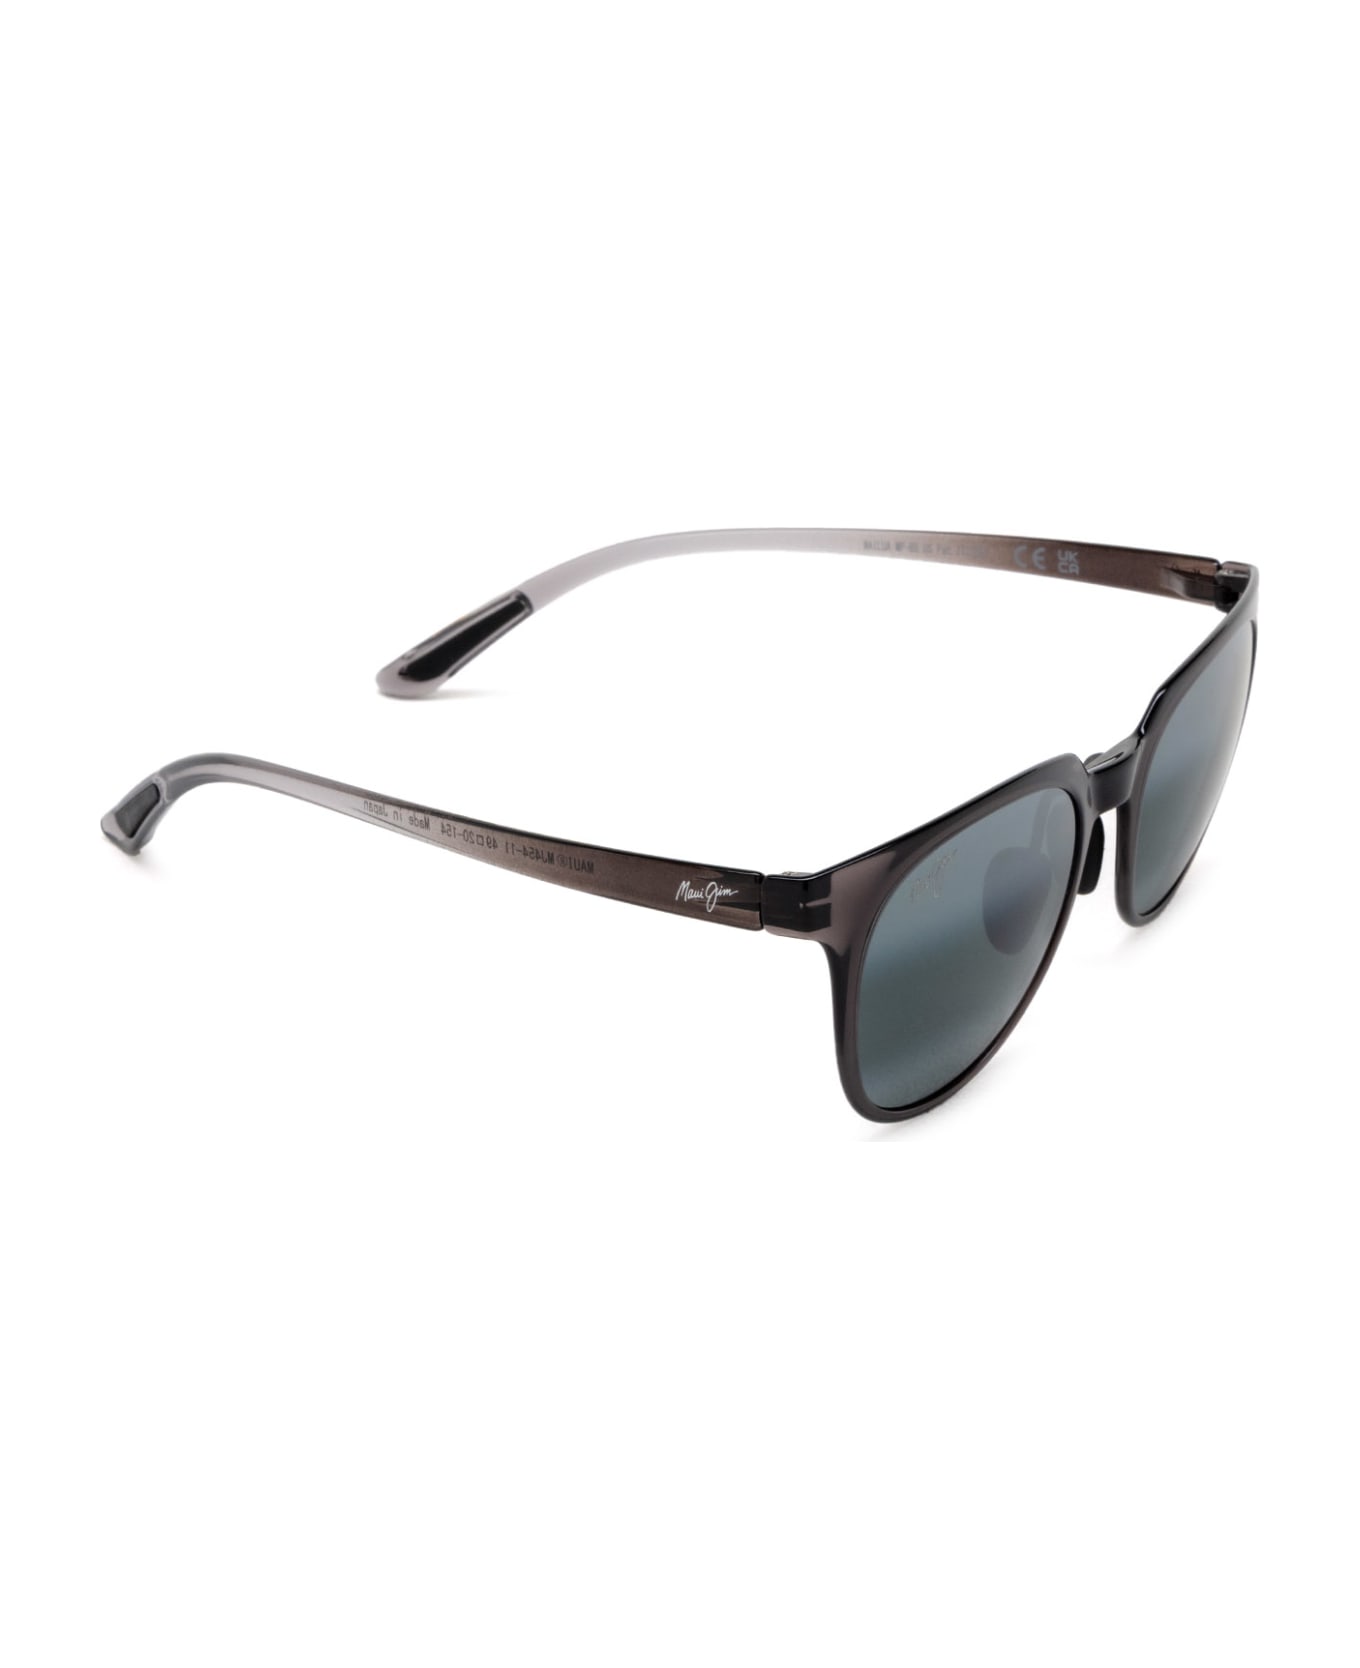 Maui Jim Mj454 Translucent Grey Sunglasses - Translucent Grey サングラス